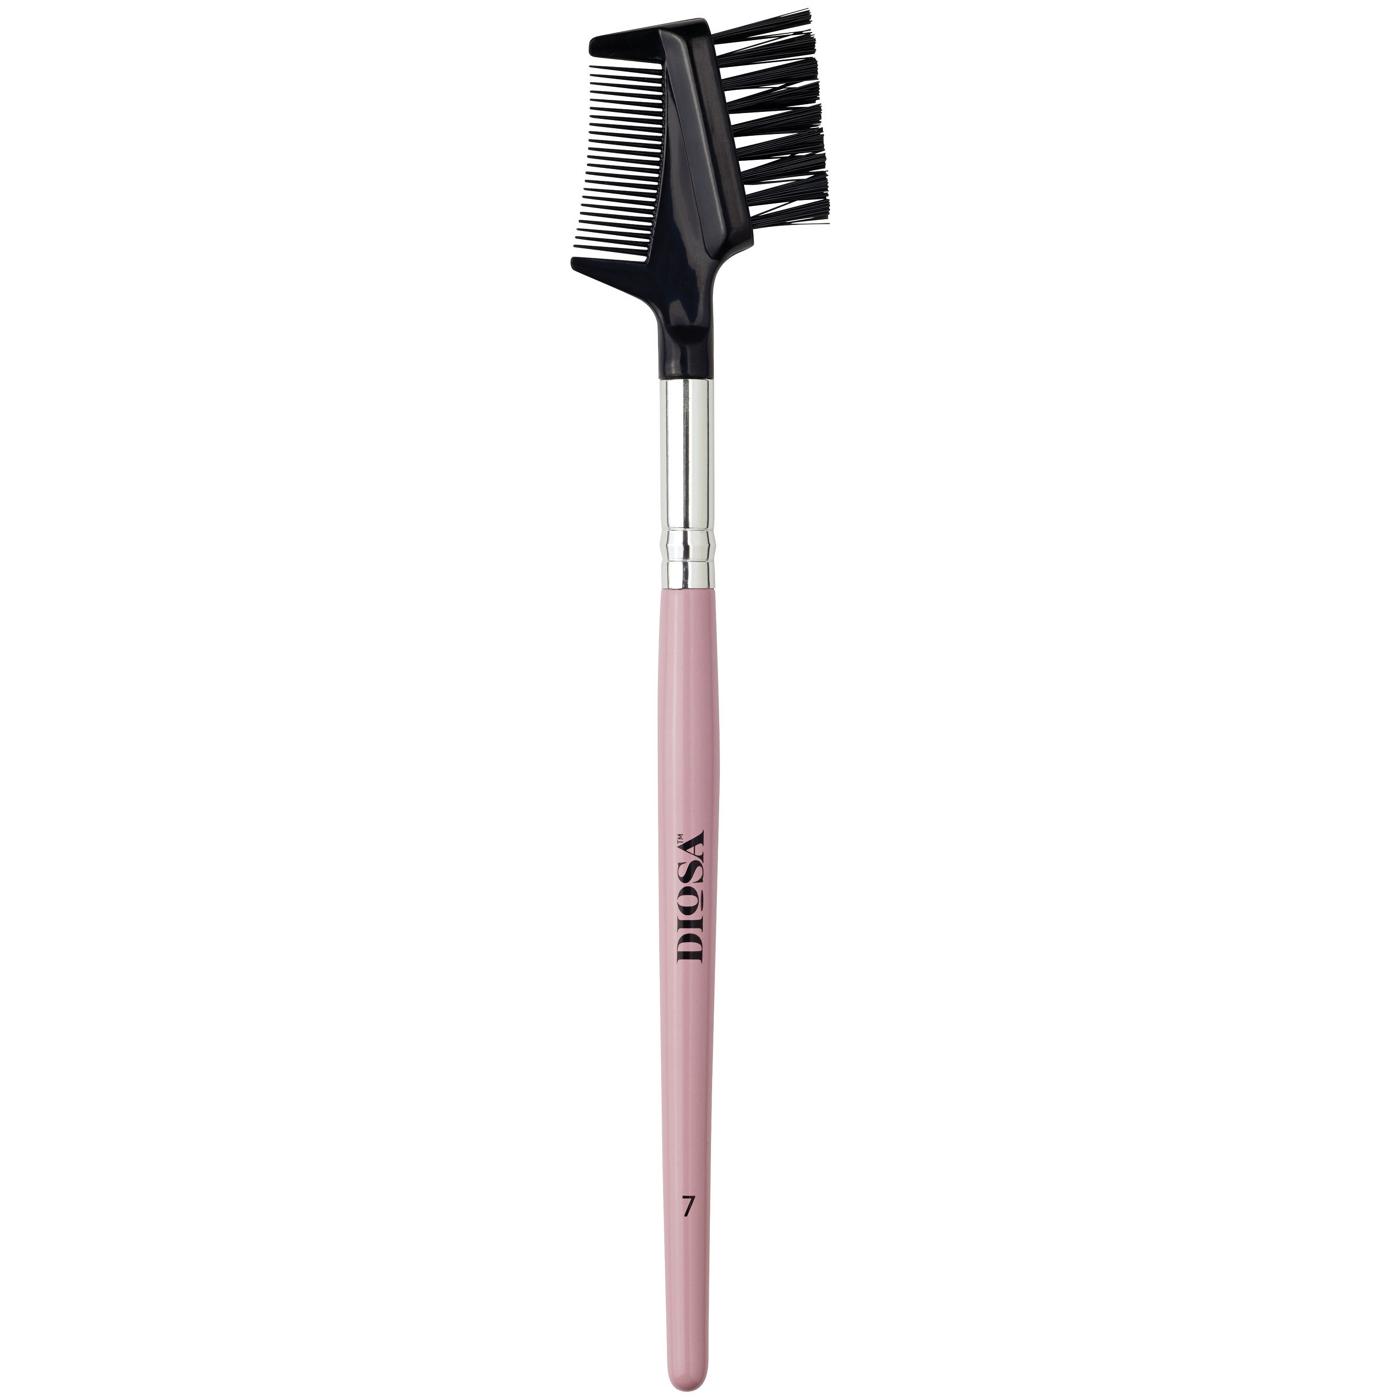 Diosa Brow Comb & Brush - 7; image 2 of 2